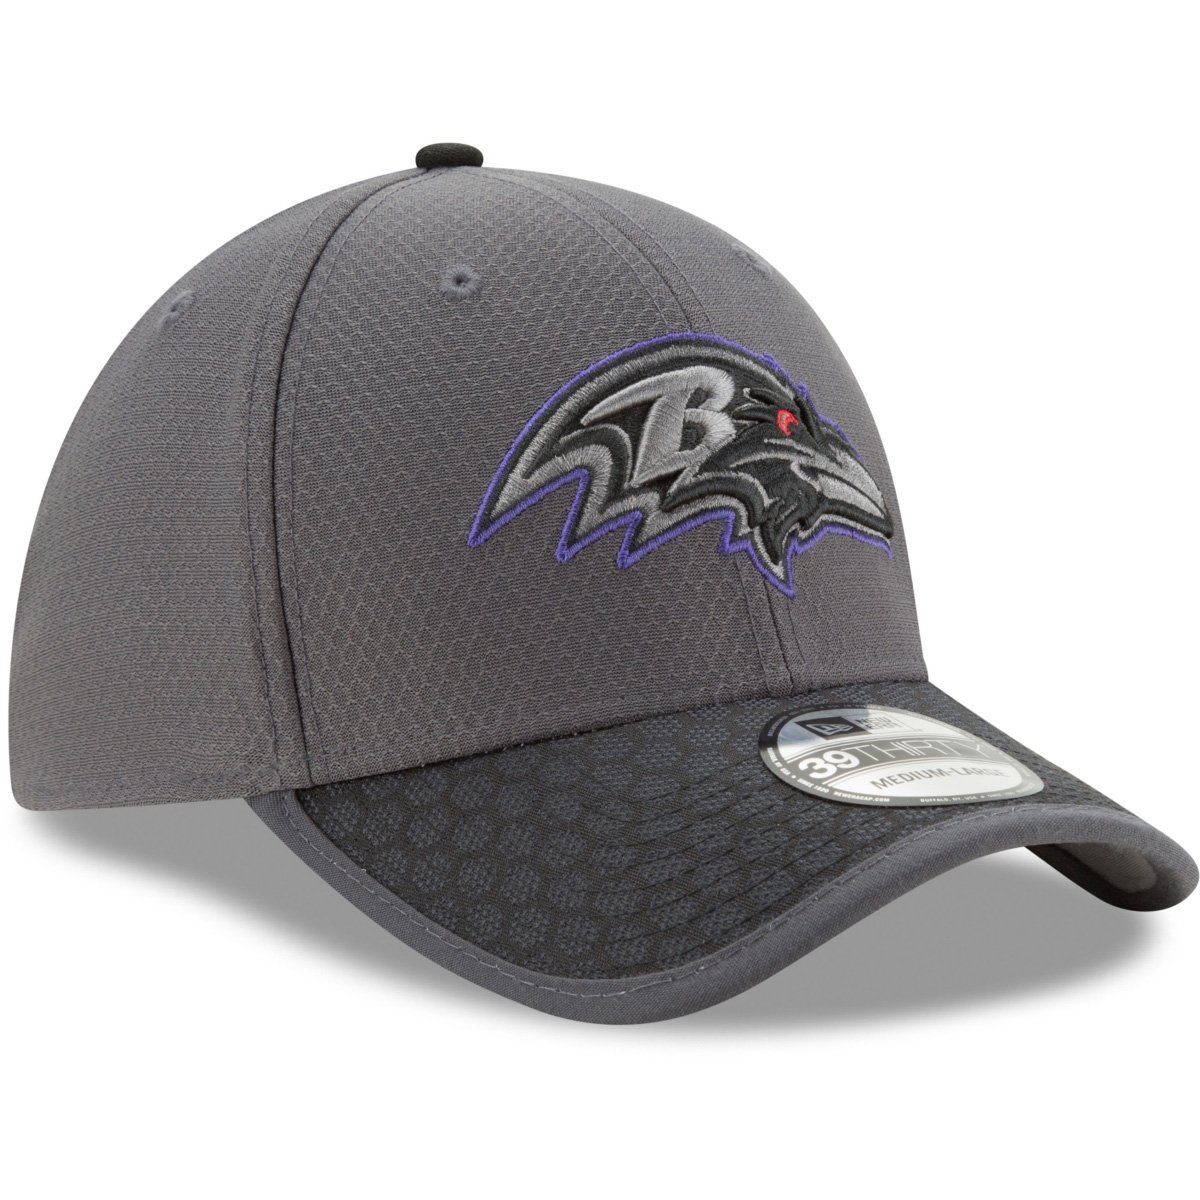 New Era Flex Cap 39Thirty NFL Ravens SIDELINE Baltimore